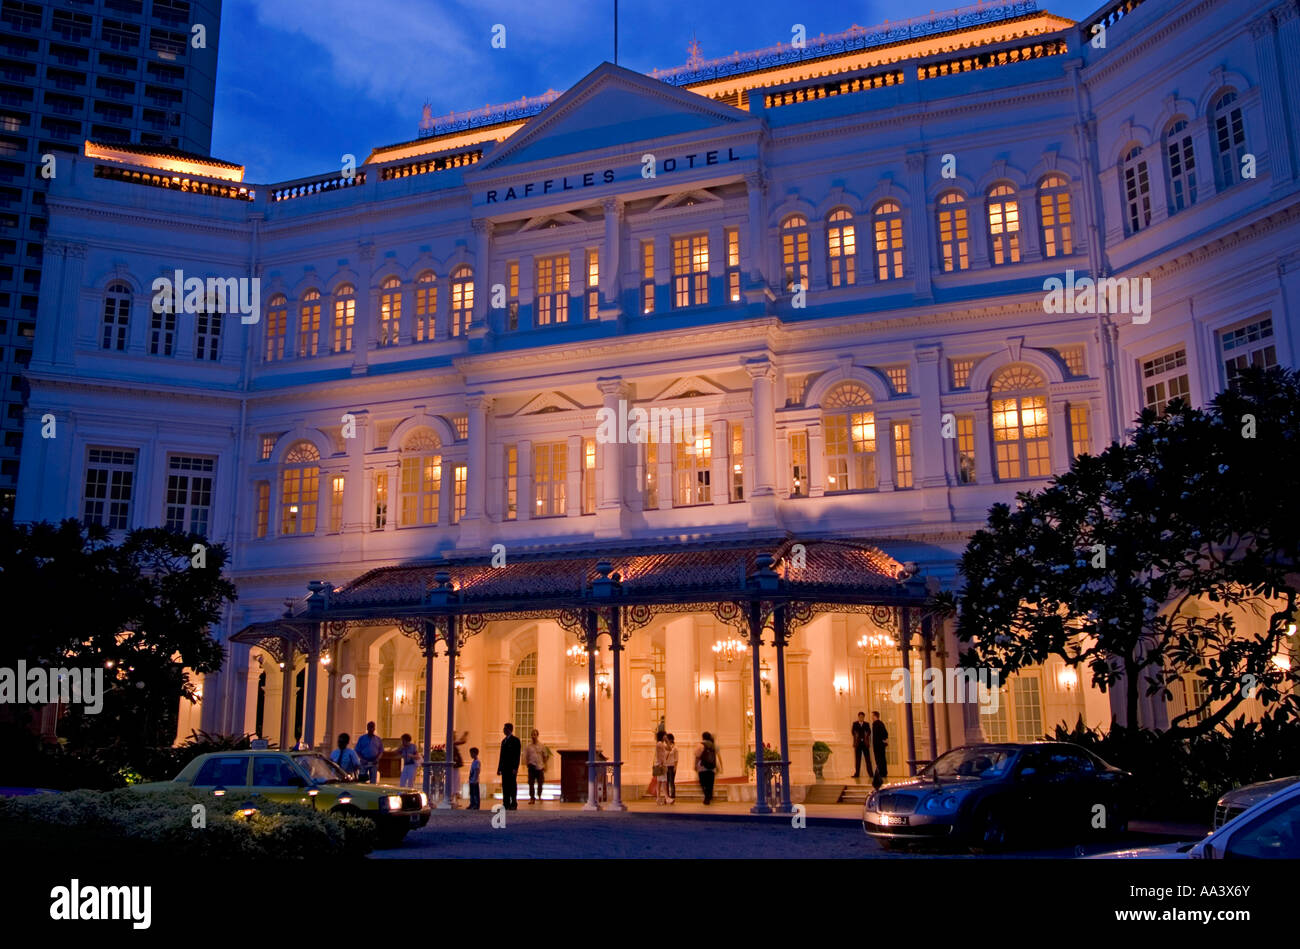 The Raffles Hotel, Singapore Stock Photo